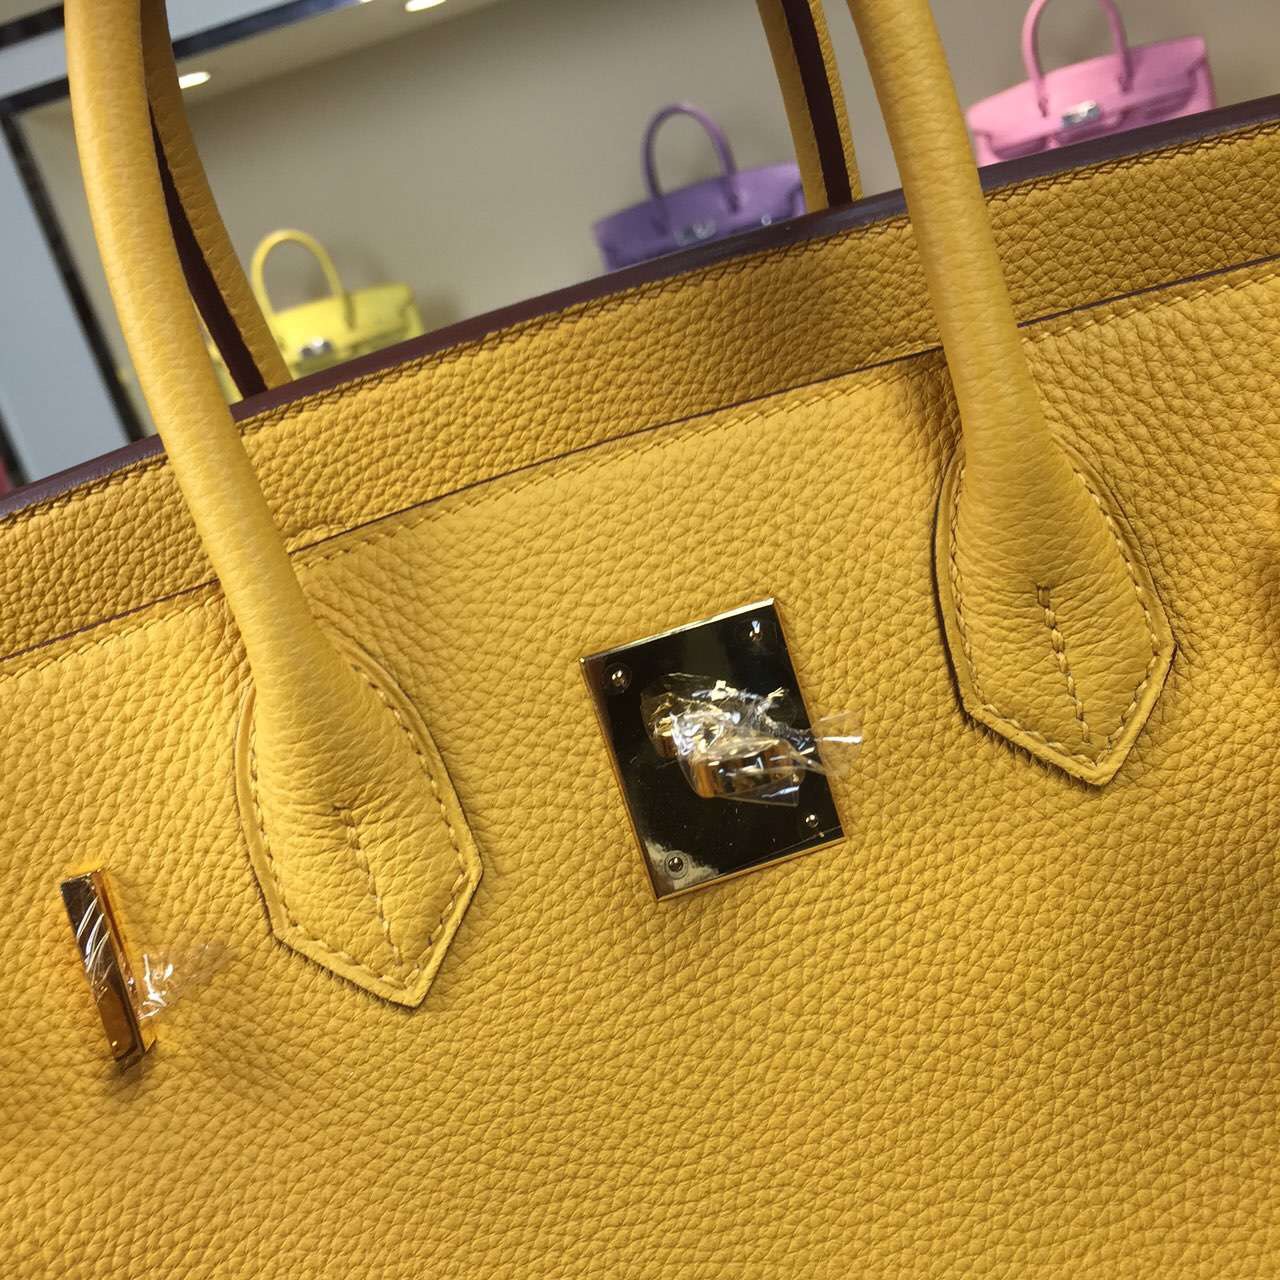 Hermes 9U Mustard Yellow Togo Calfskin Leather Birkin Bag 30CM Women&#8217;s Tote Bag